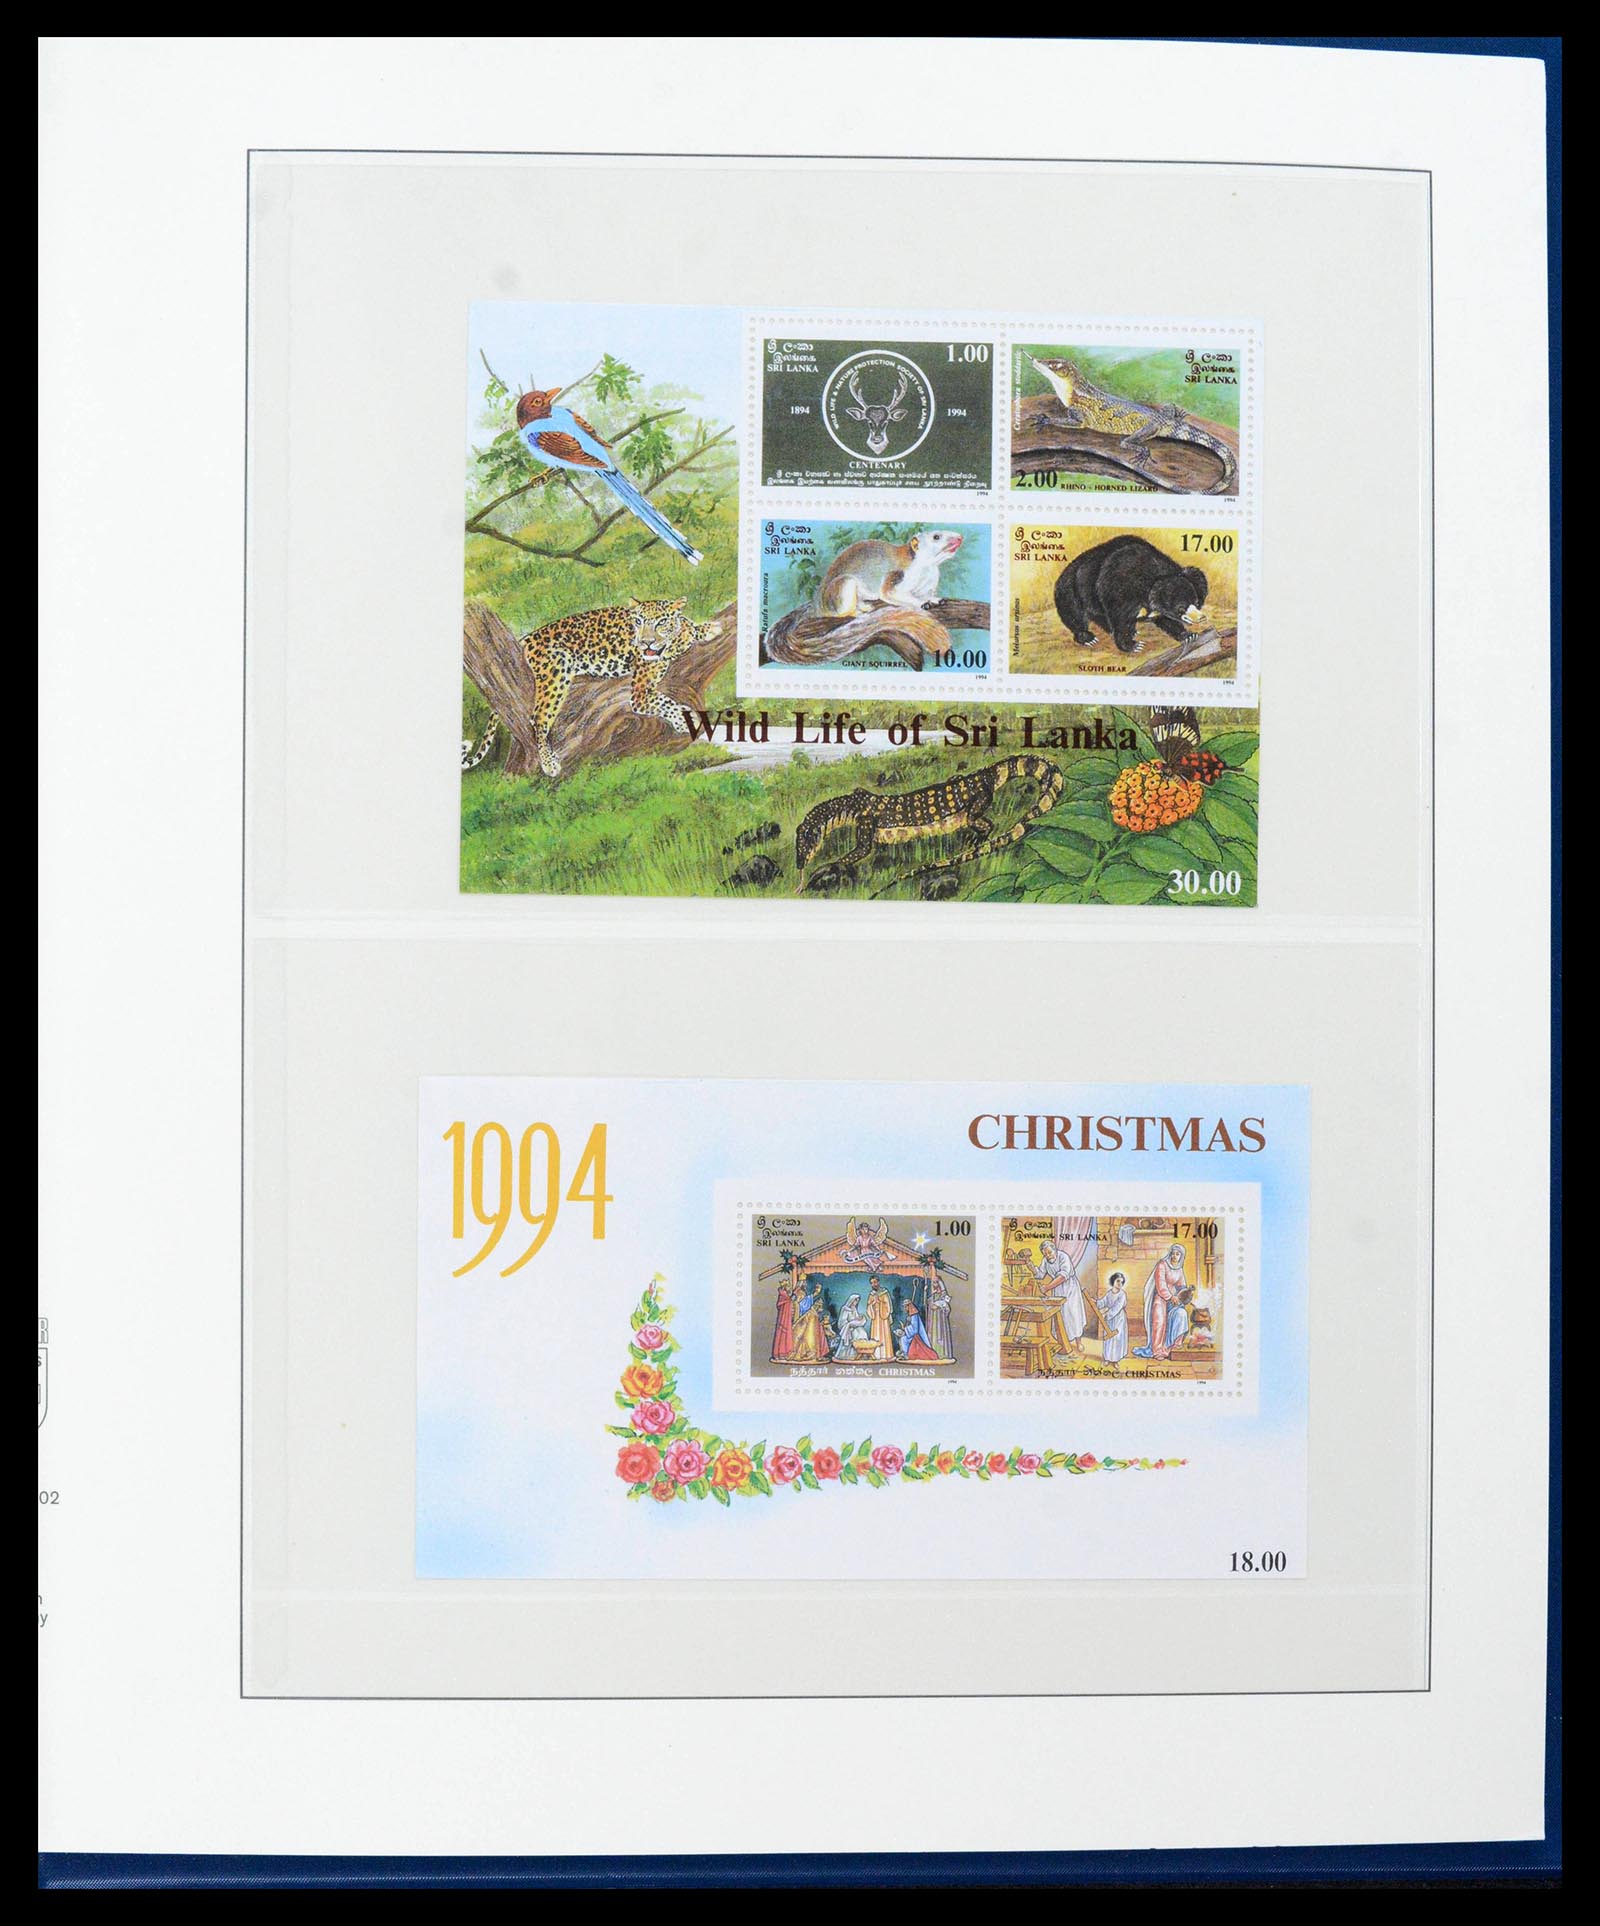 39003 0285 - Stamp collection 39003 Ceylon/Sri Lanka 1857-2003.